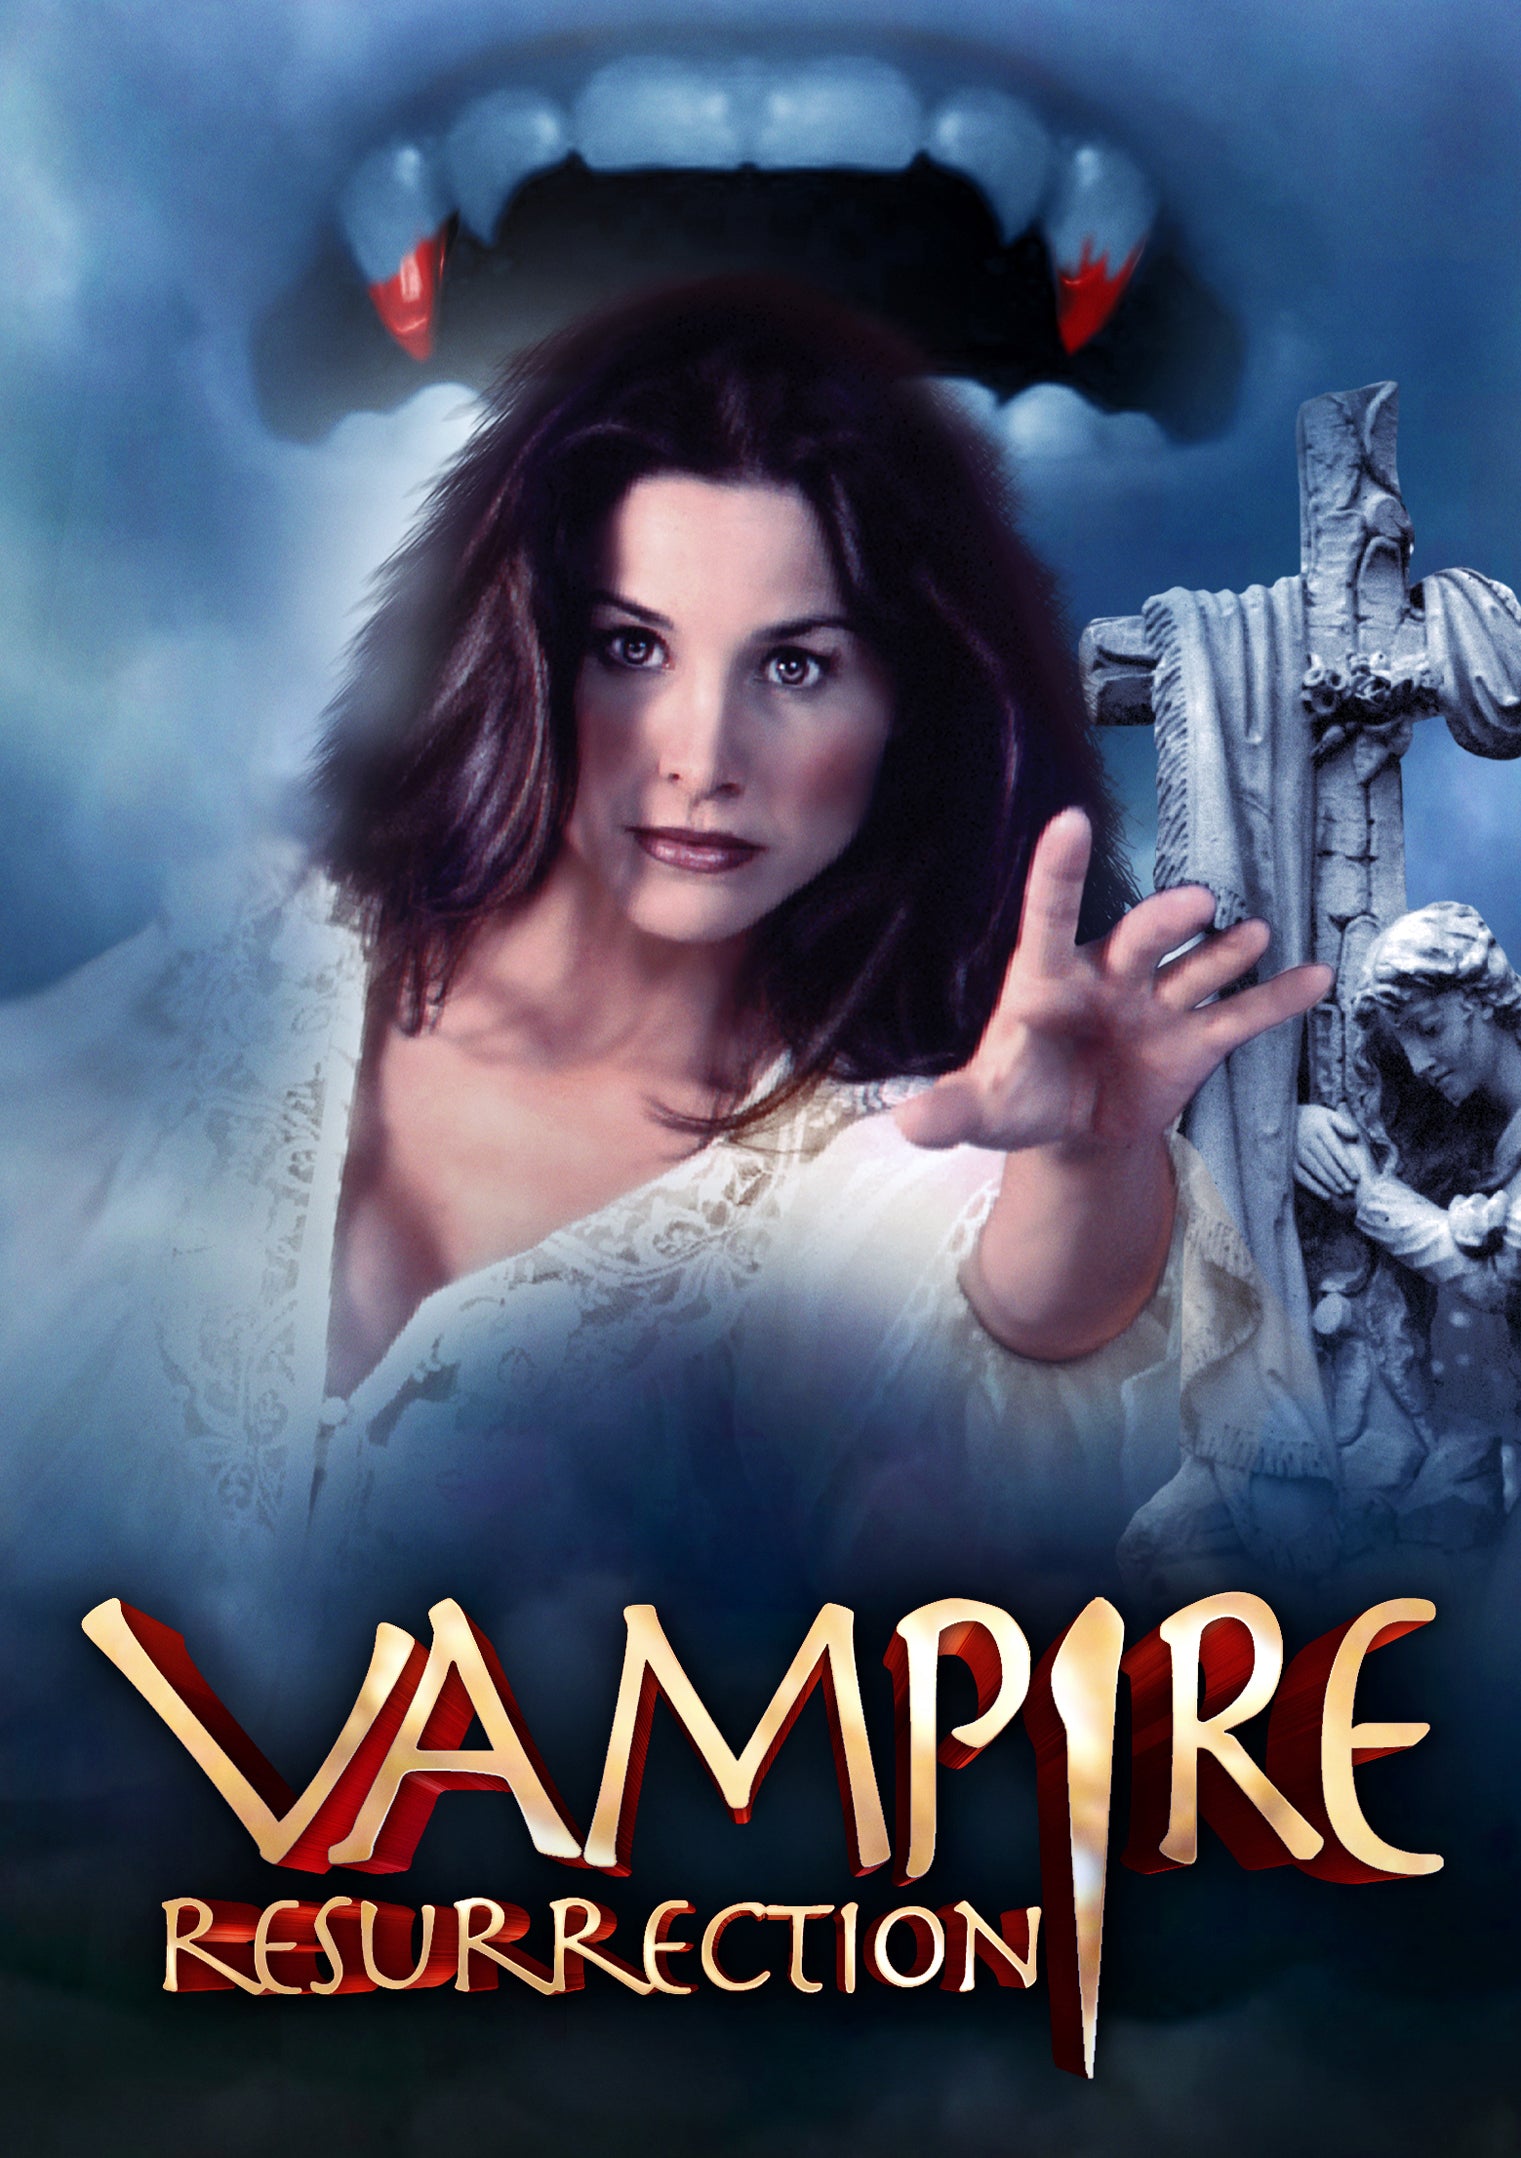 VAMPIRE RESURRECTION DVD